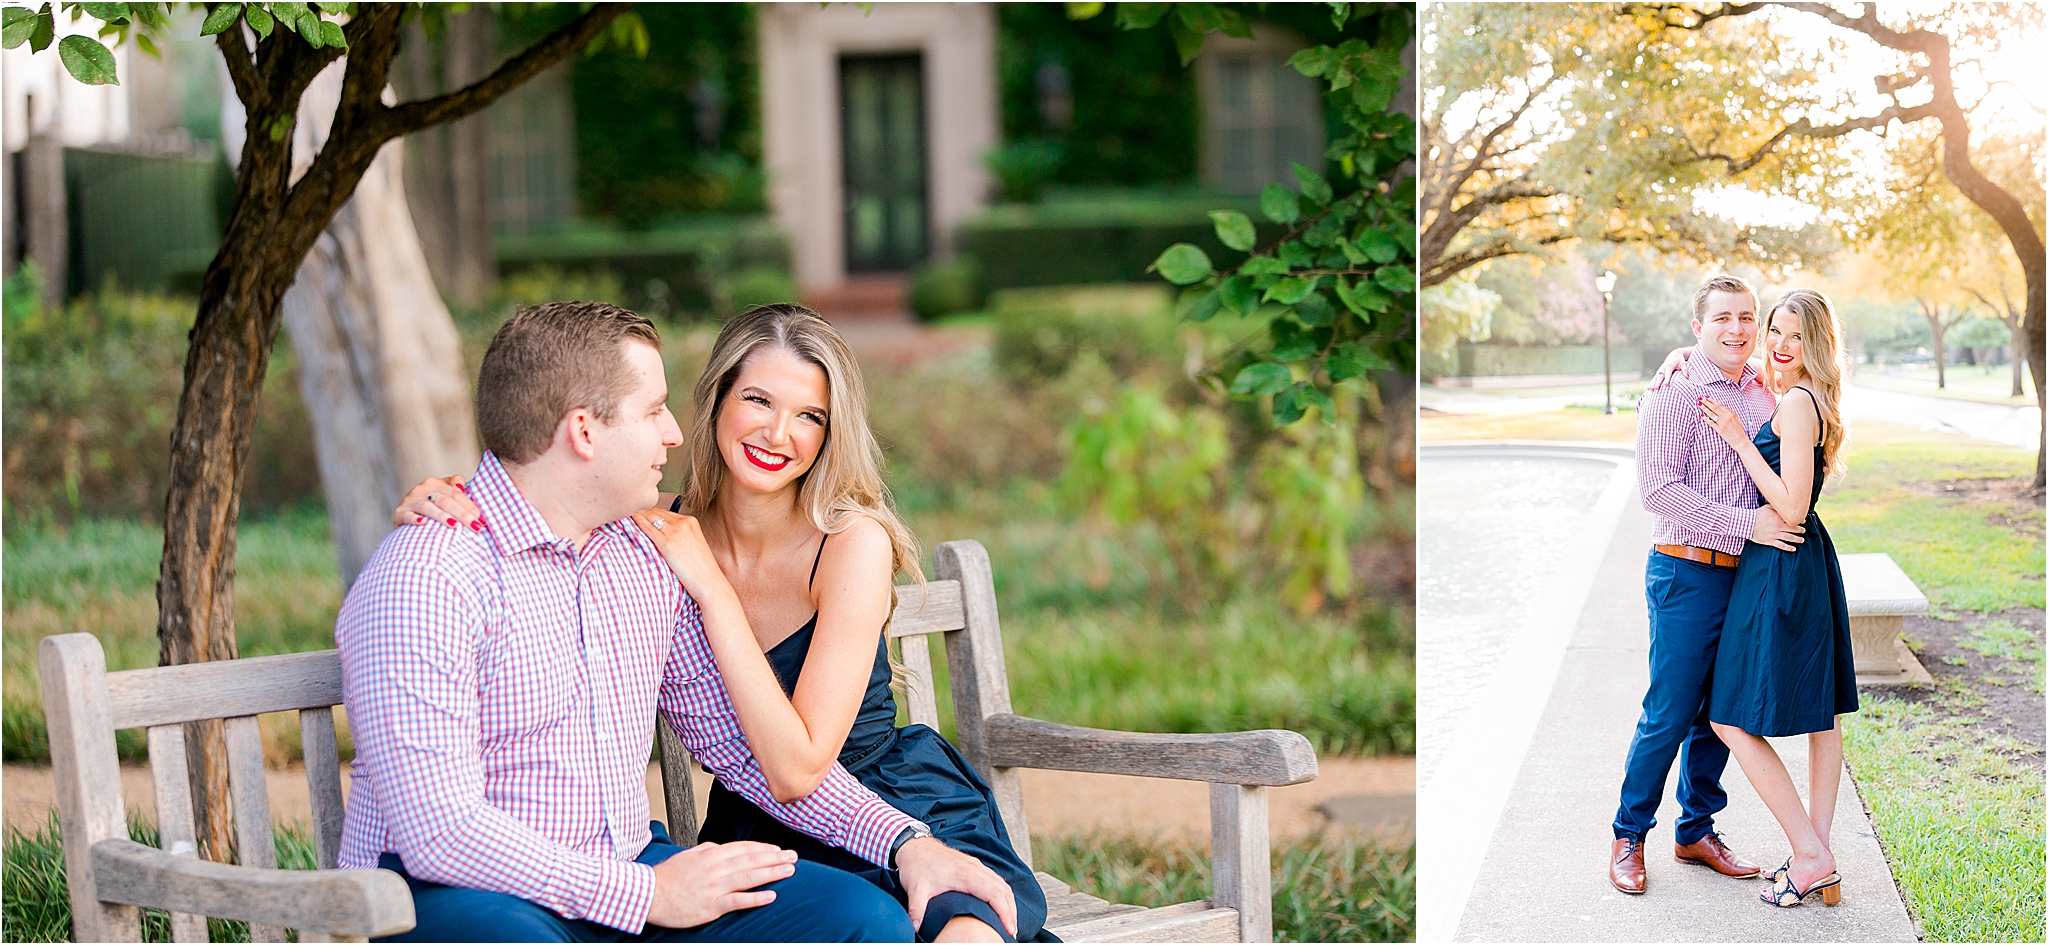 Highland Park engagement session at Flippen Park by Dallas Wedding Photographer Jillian Hogan Photography 